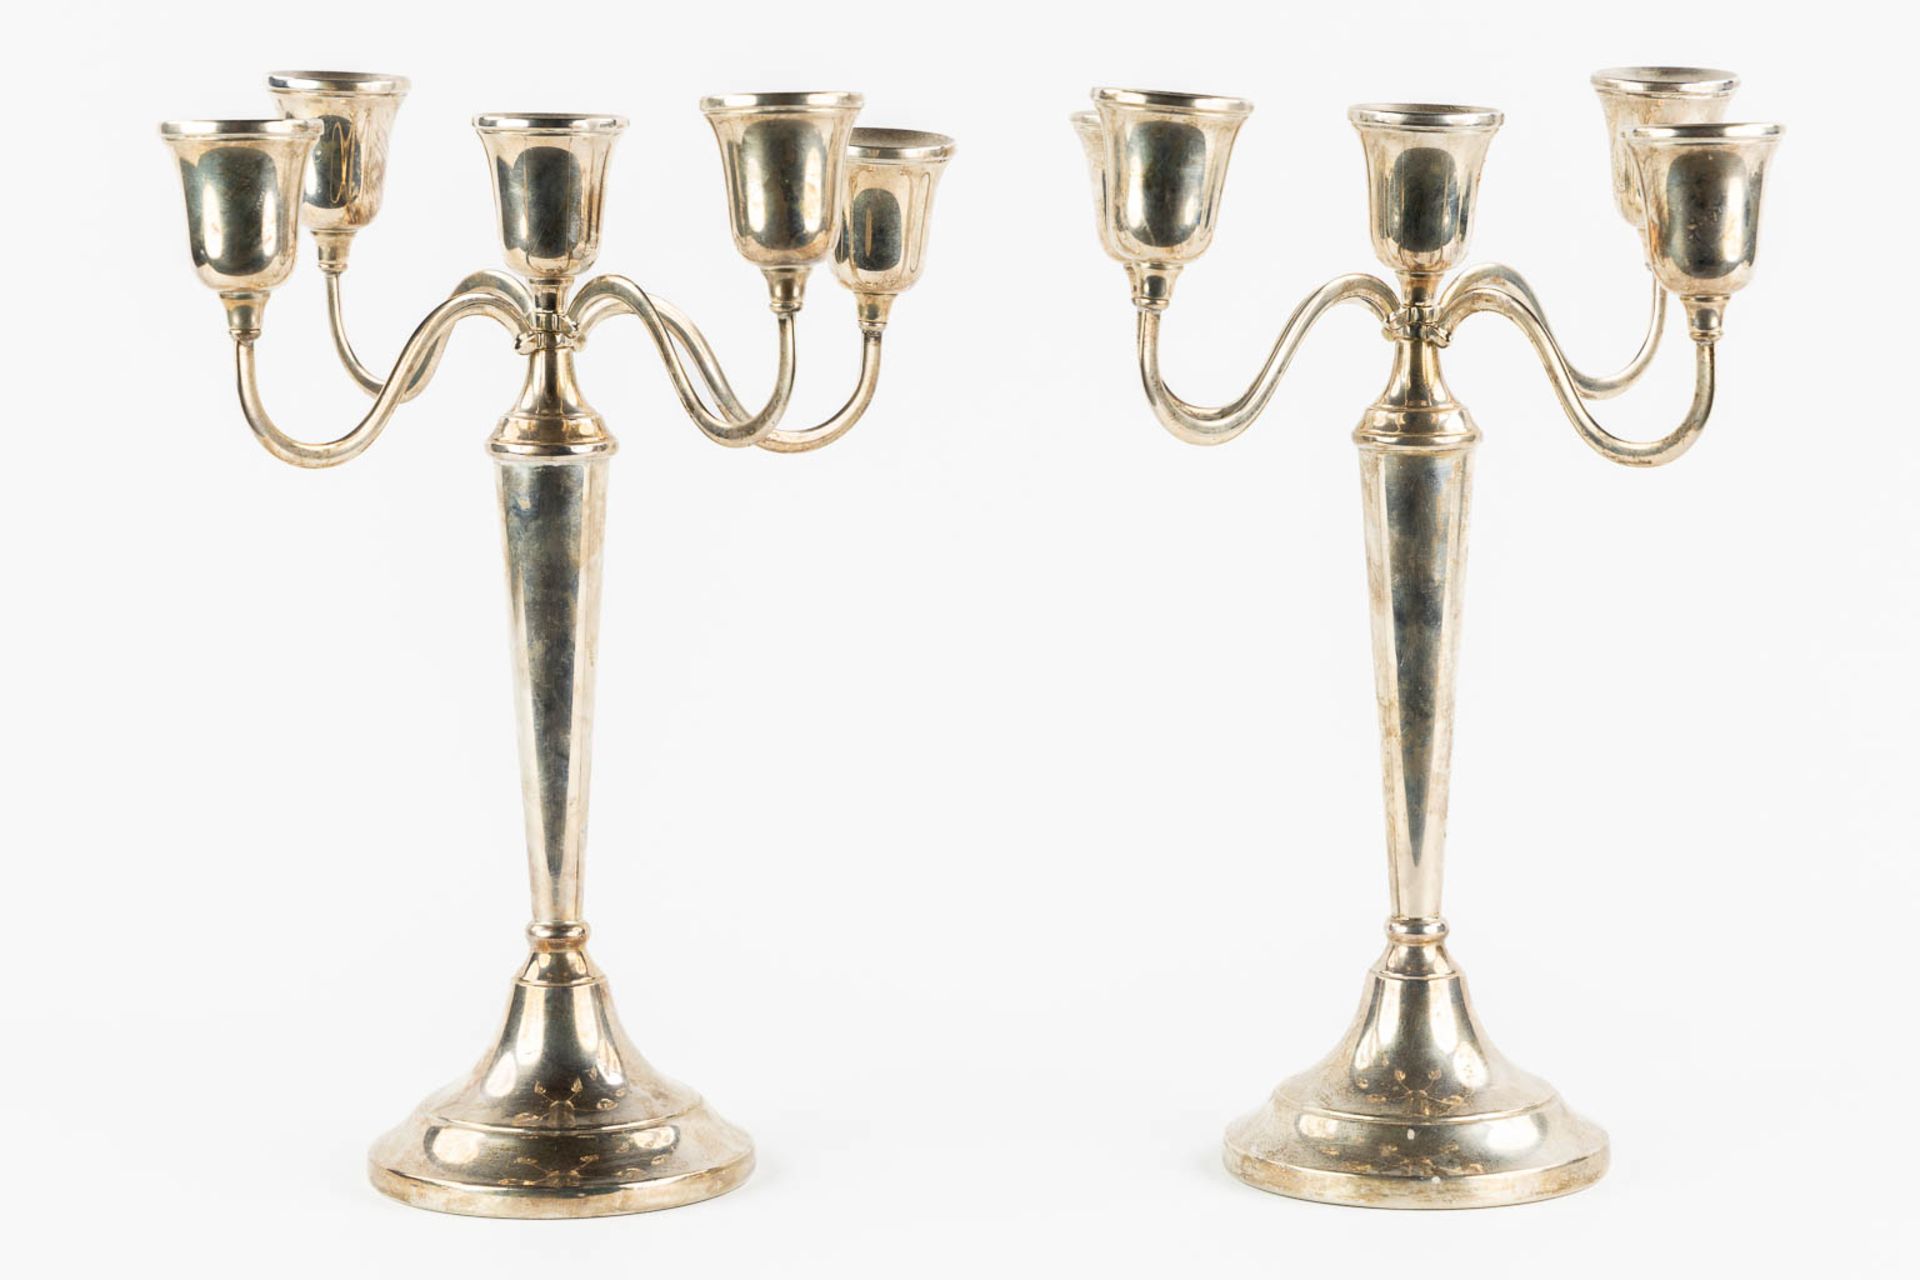 David Shaw Silverware Ltd, A pair of silver candelabra. 1992. (L:28 x W:28 x H:34 cm) - Image 5 of 12